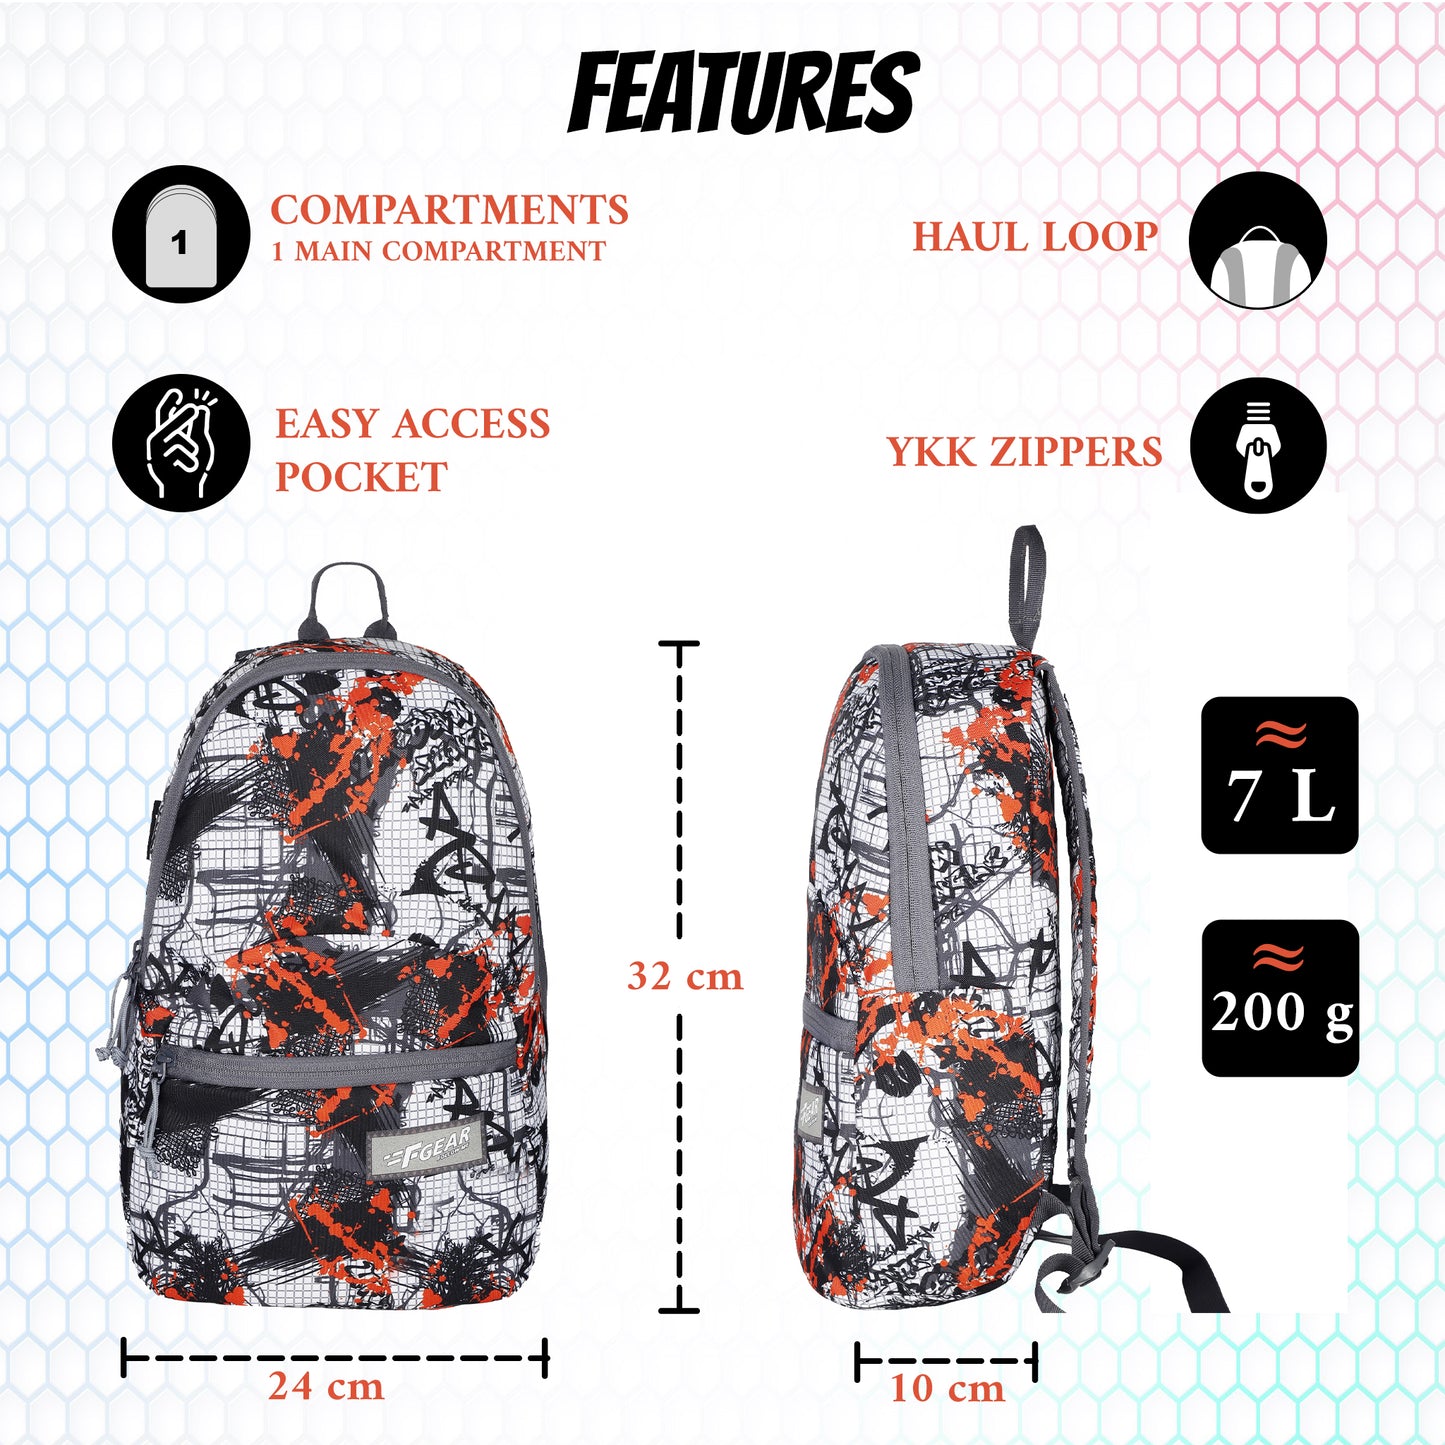 Ferris 7 L Graphic Black Orange Backpack